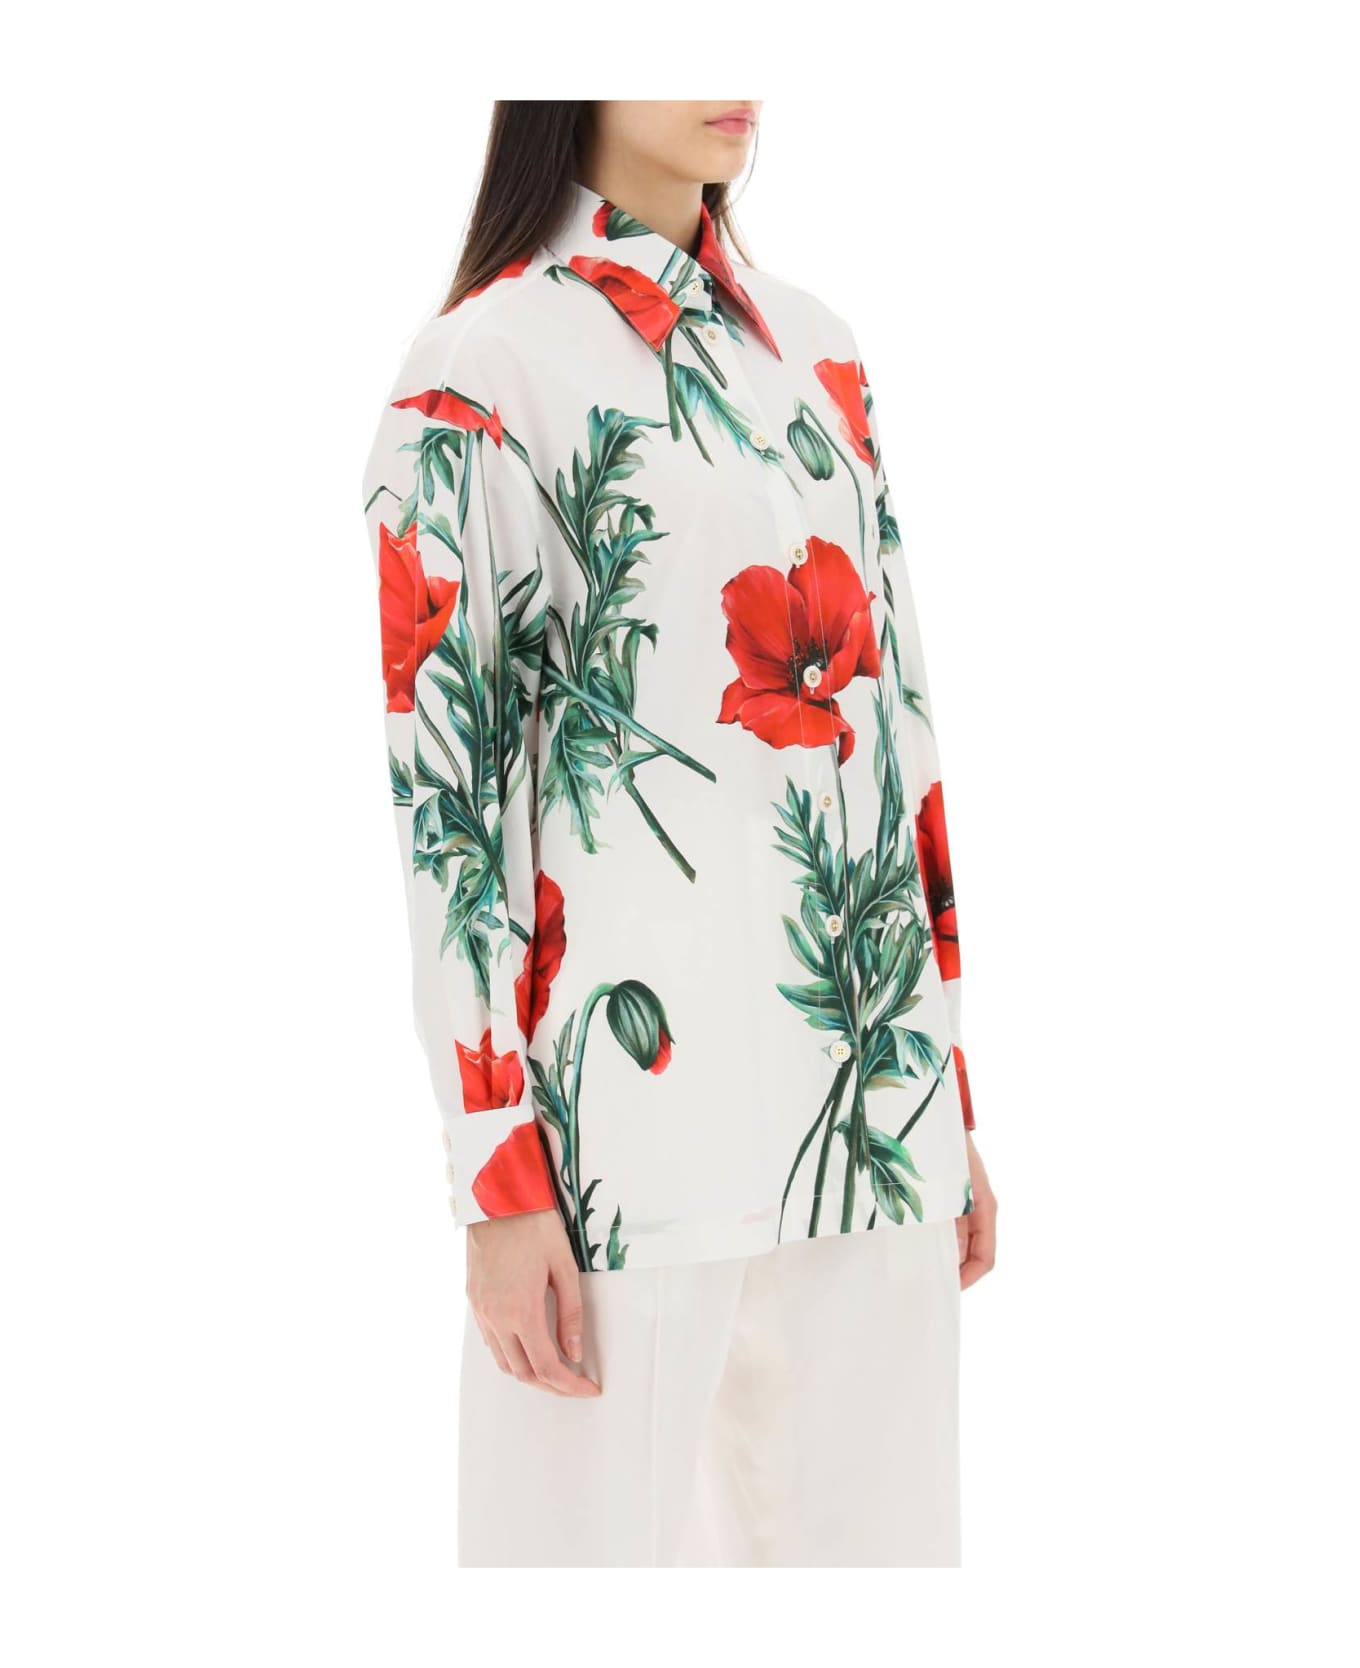 Dolce & Gabbana Poppy Print Poplin Shirt - Multicolor シャツ